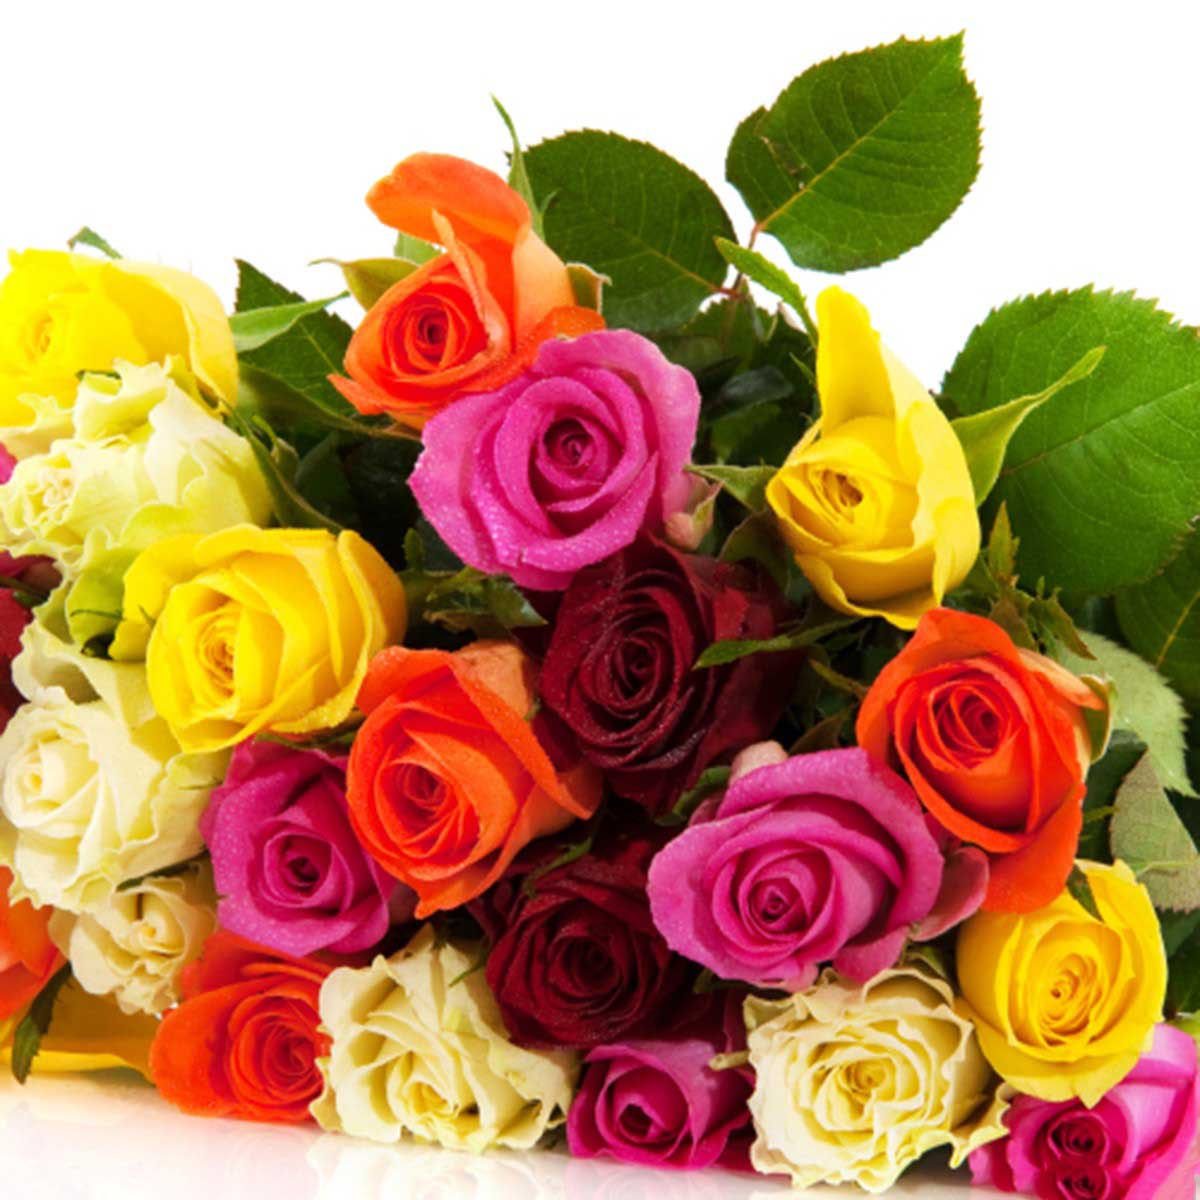 Tải ảnh bó hoa hồng đẹp - Alo Flowers